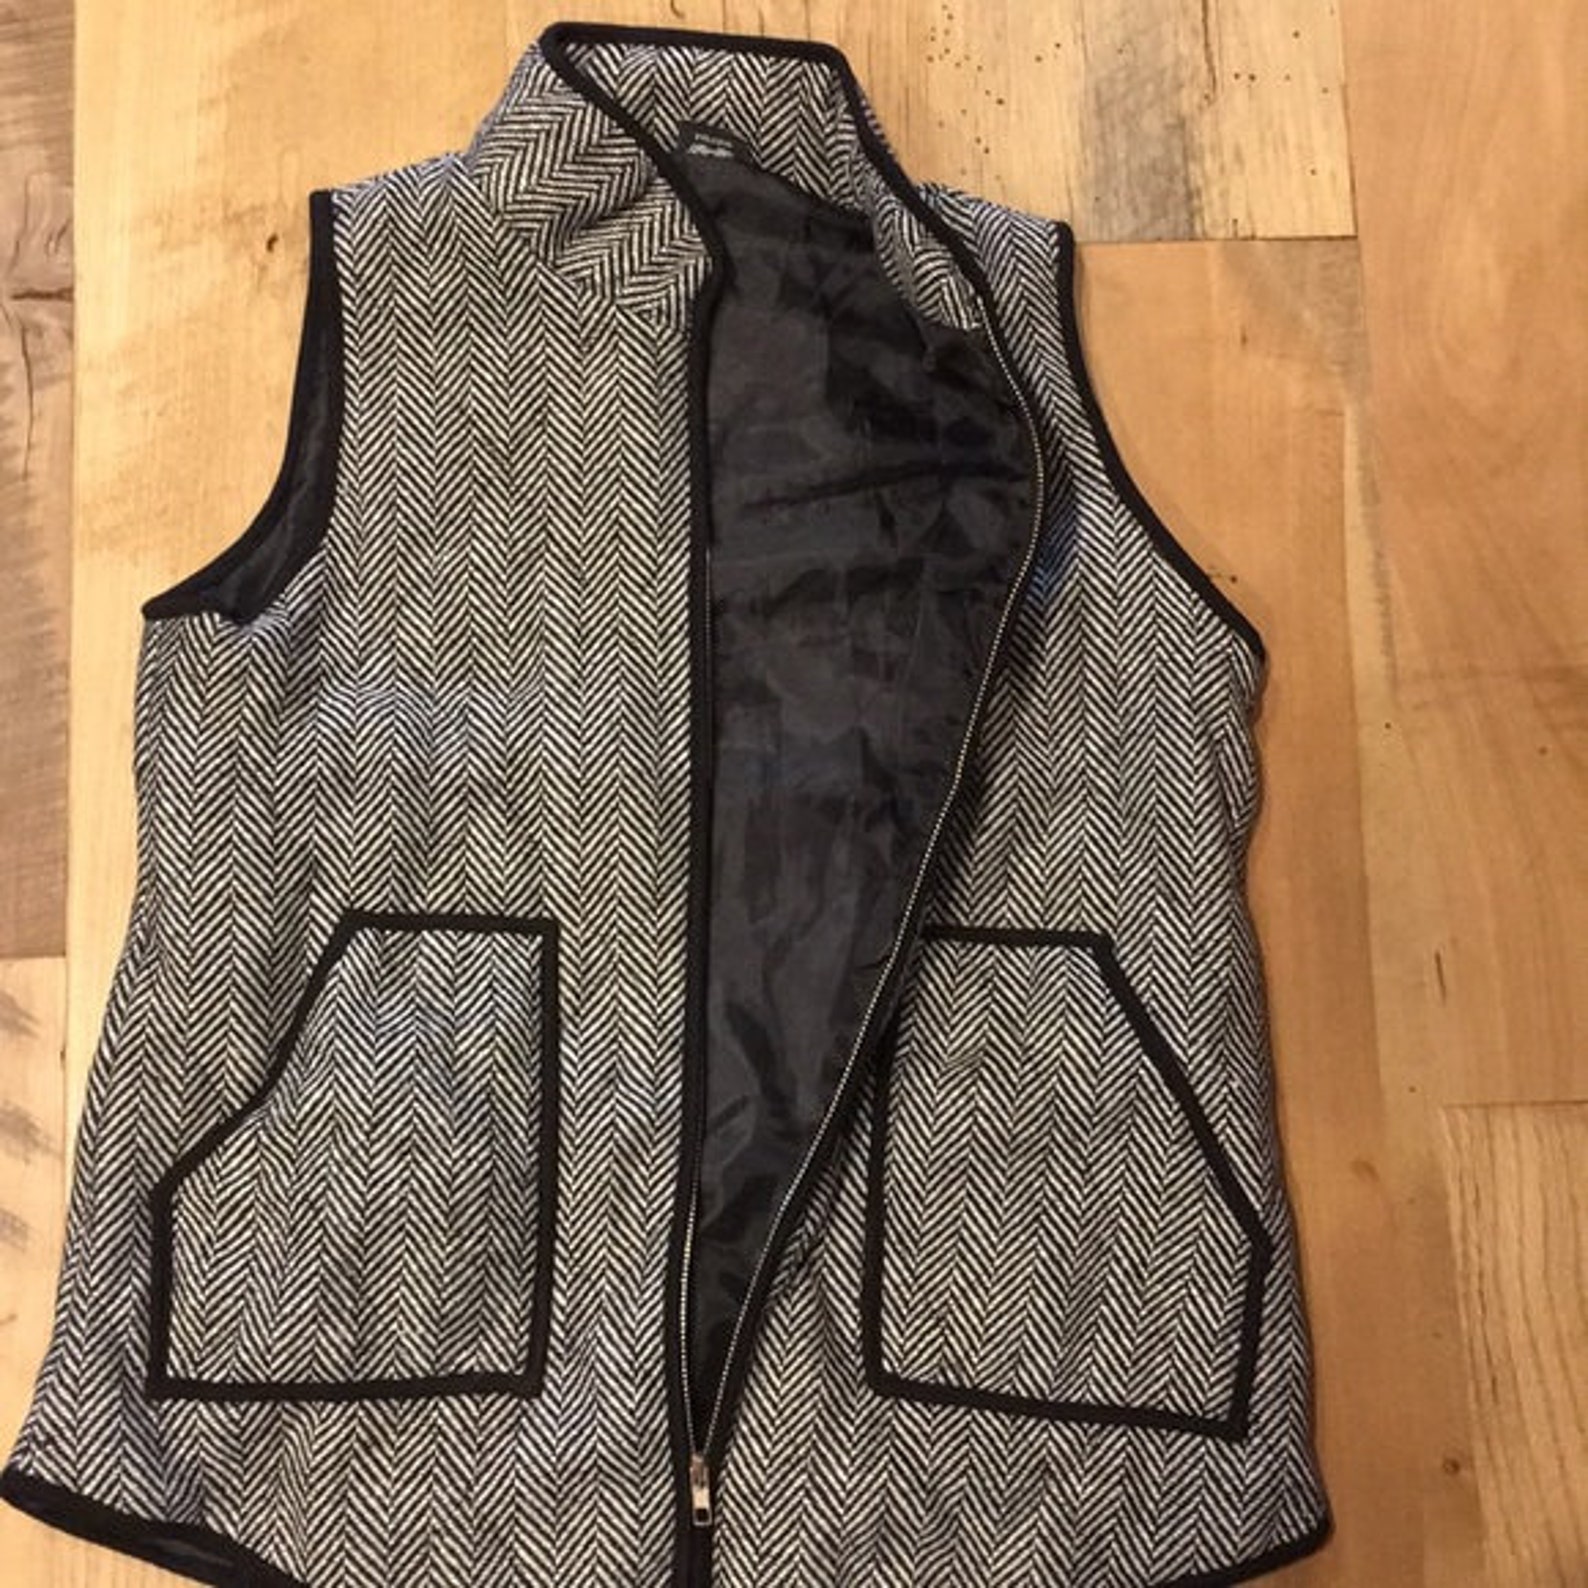 New KATYDID Herringbone TWEED Vest Jacket Lined XS-L Black - Etsy